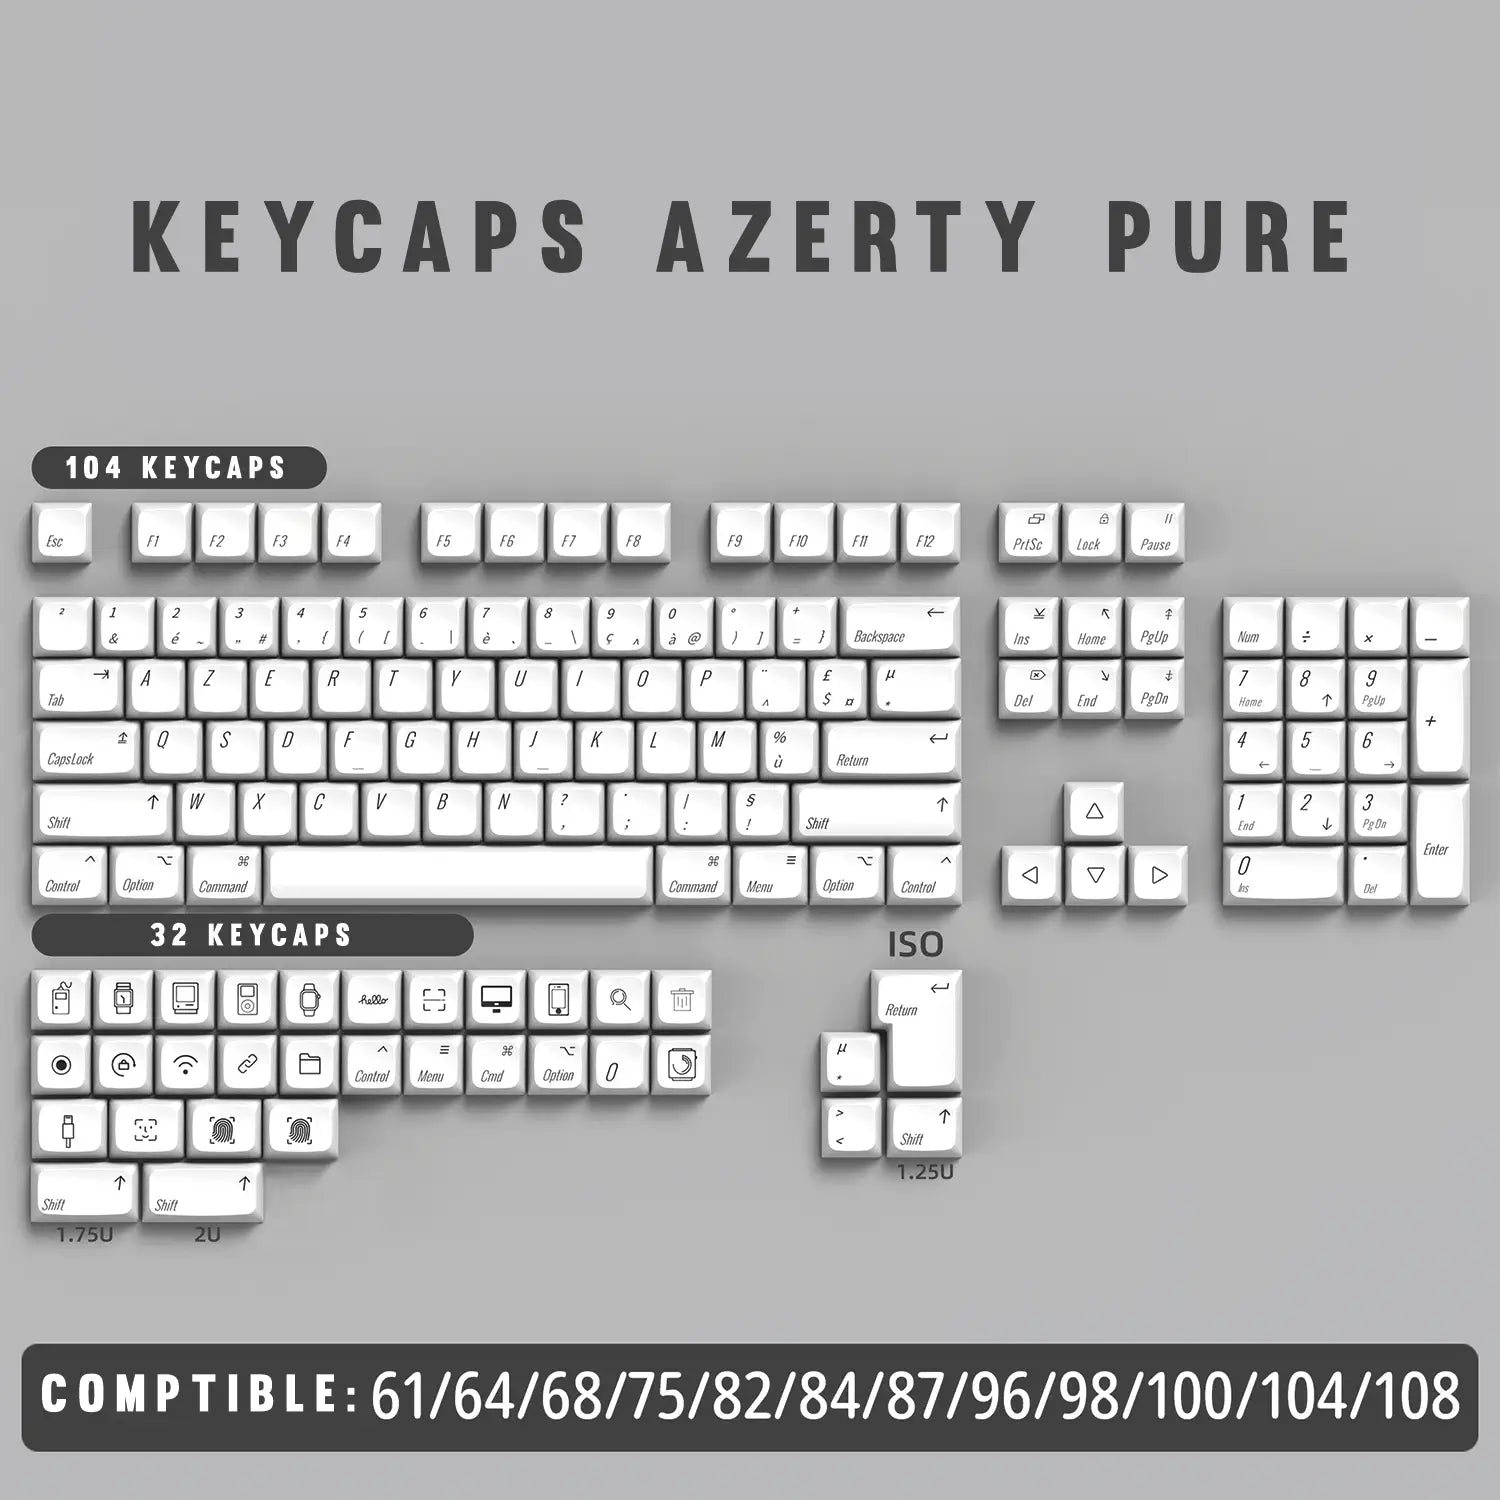 AZERTY Pure Keycaps